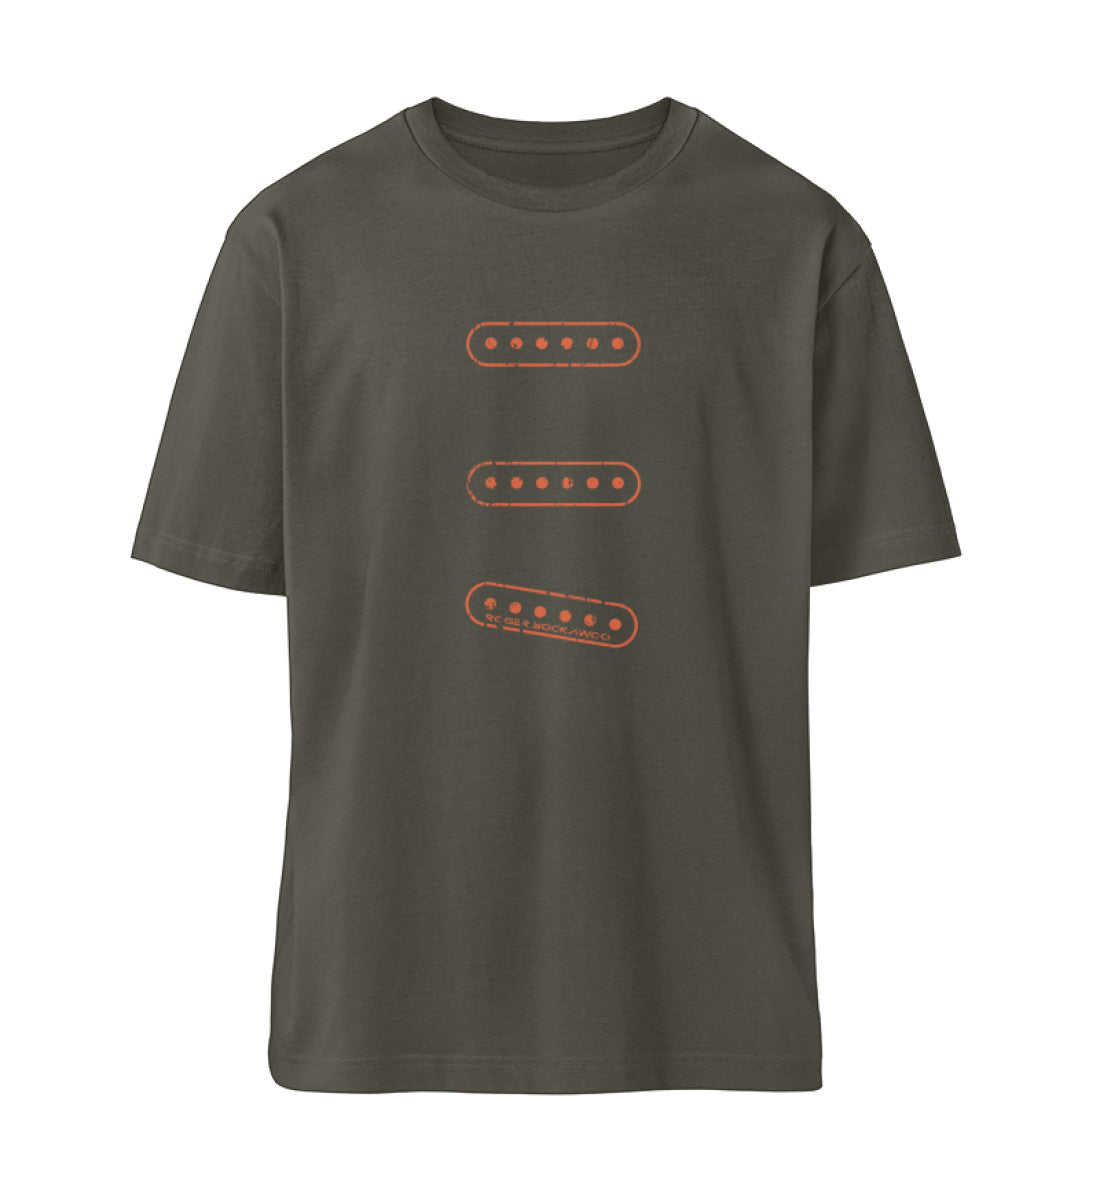 Khaki T-Shirt Unisex Relaxed Fit für Frauen und Männer bedruckt mit dem Design der Roger Rockawoo Kollektion E-Gitarren Single Coil Set Up